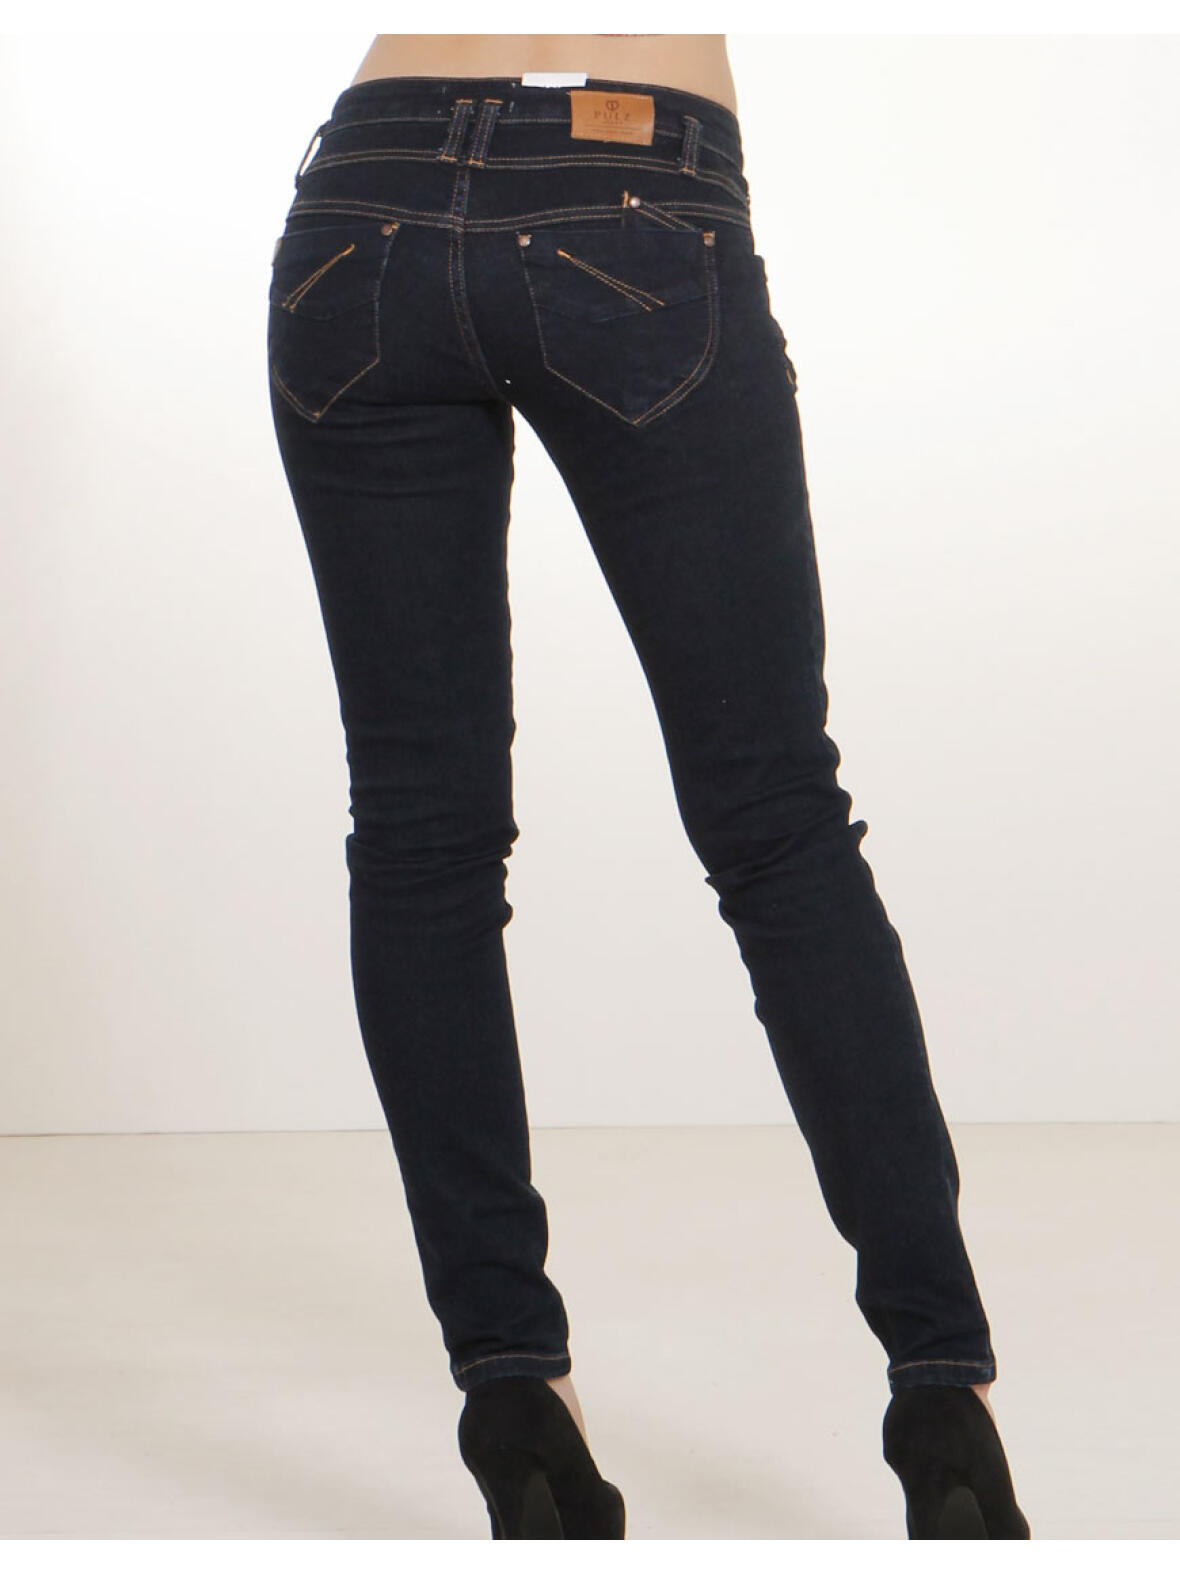 Bore Optagelsesgebyr Sikker Boutique Dorthe - Pulz Anett jeans